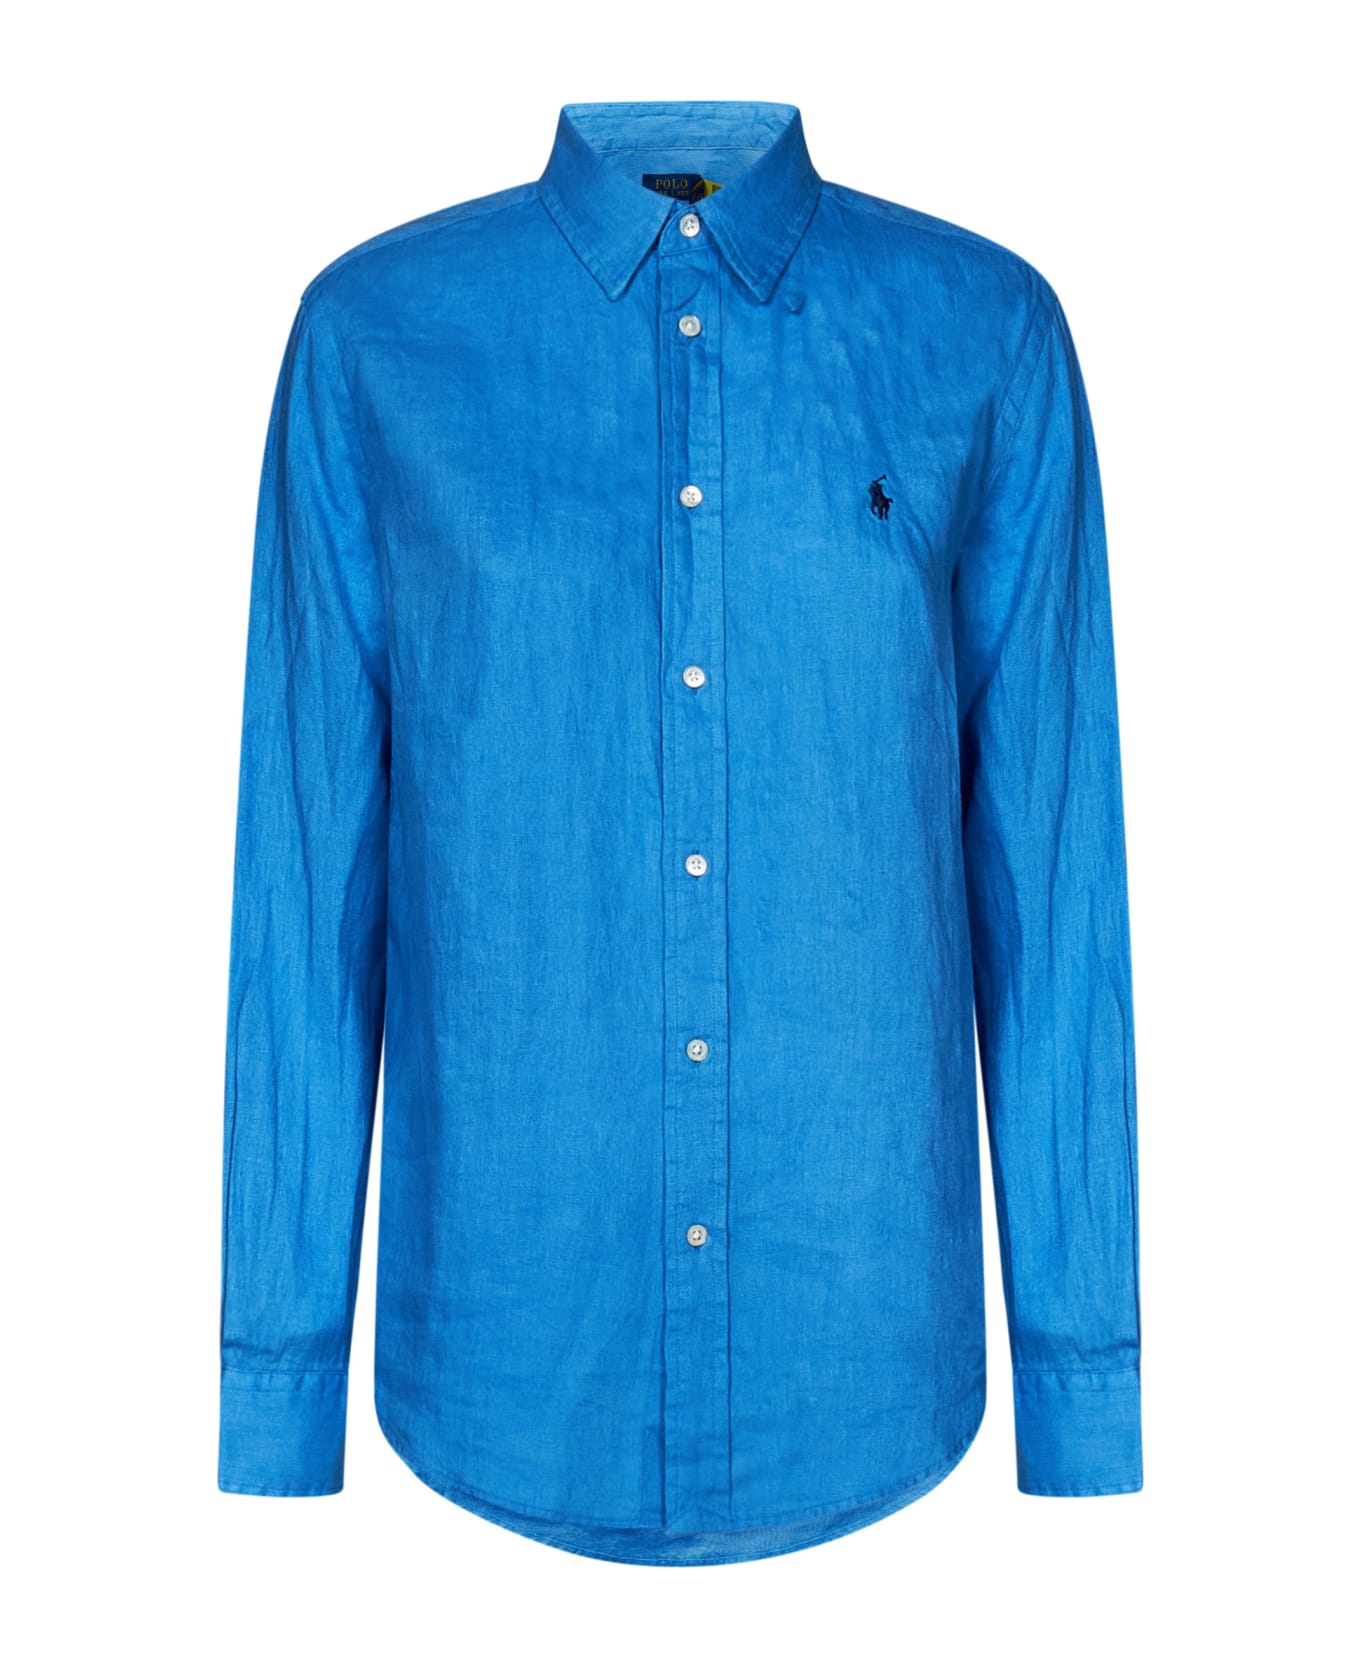 Polo Ralph Lauren Logo Embroidered Round Hem Shirt - Blue